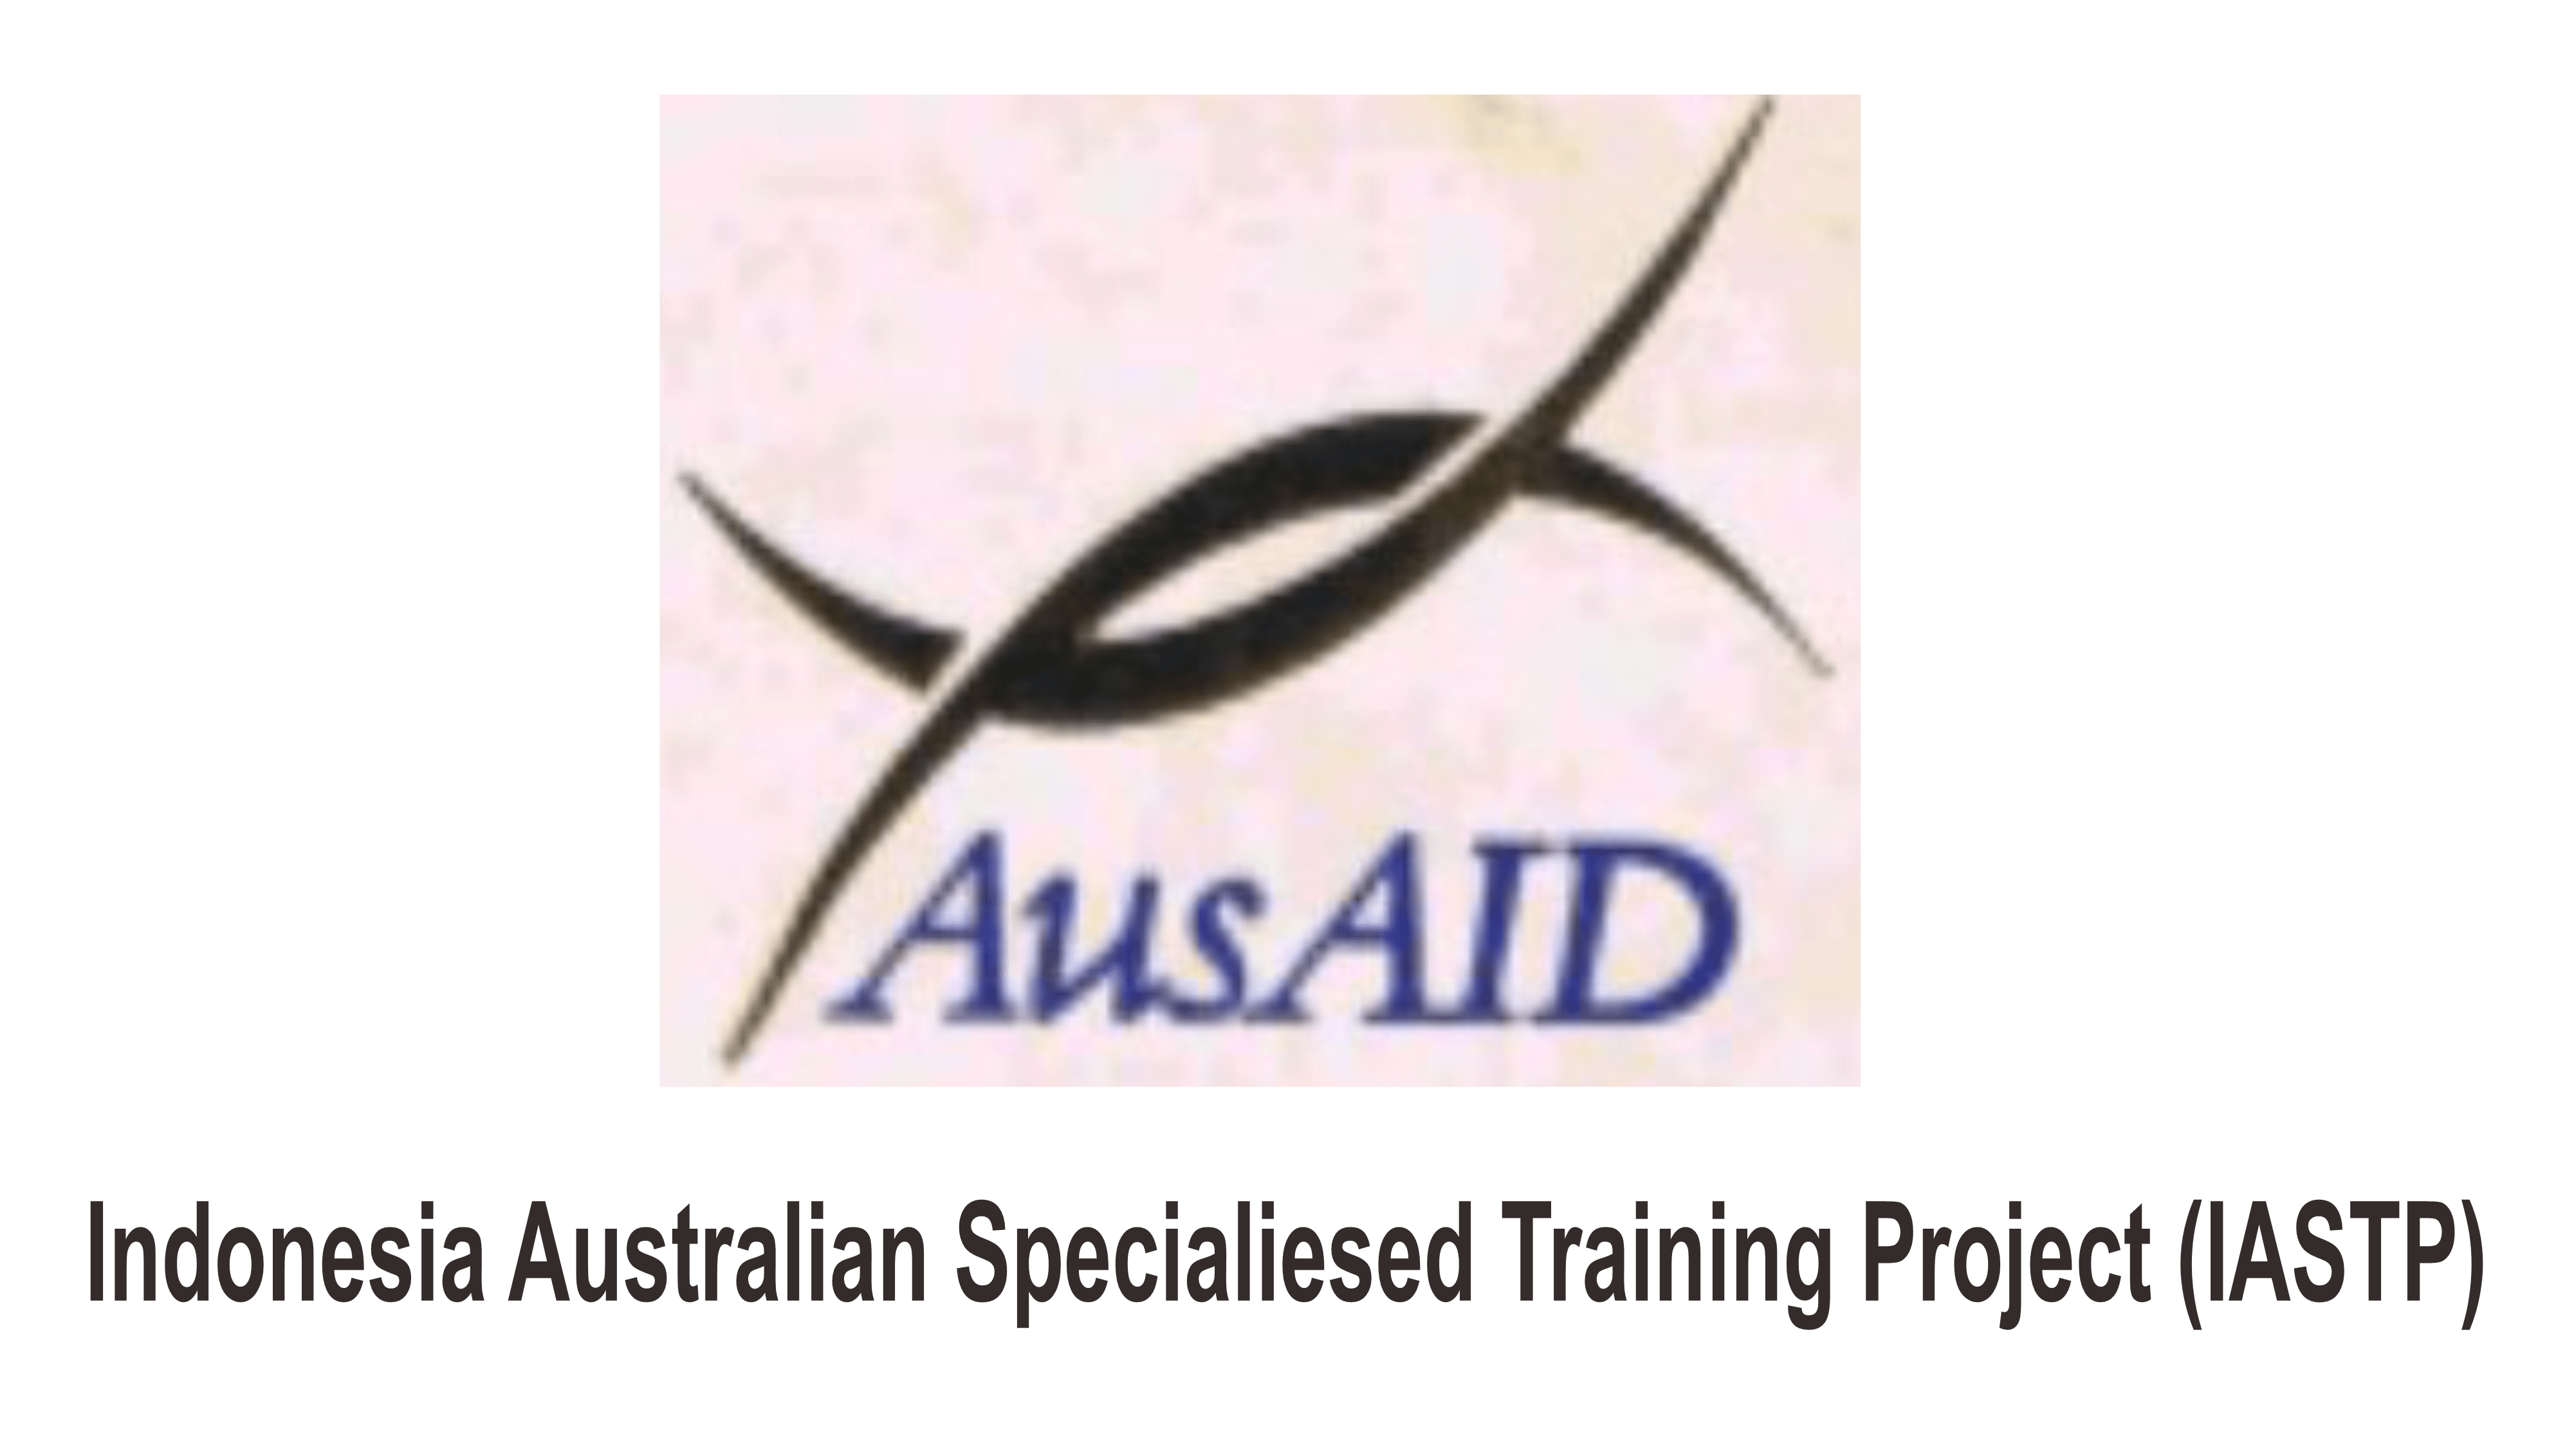 Indonesia Australian Specialiesed Training Project (IASTP)